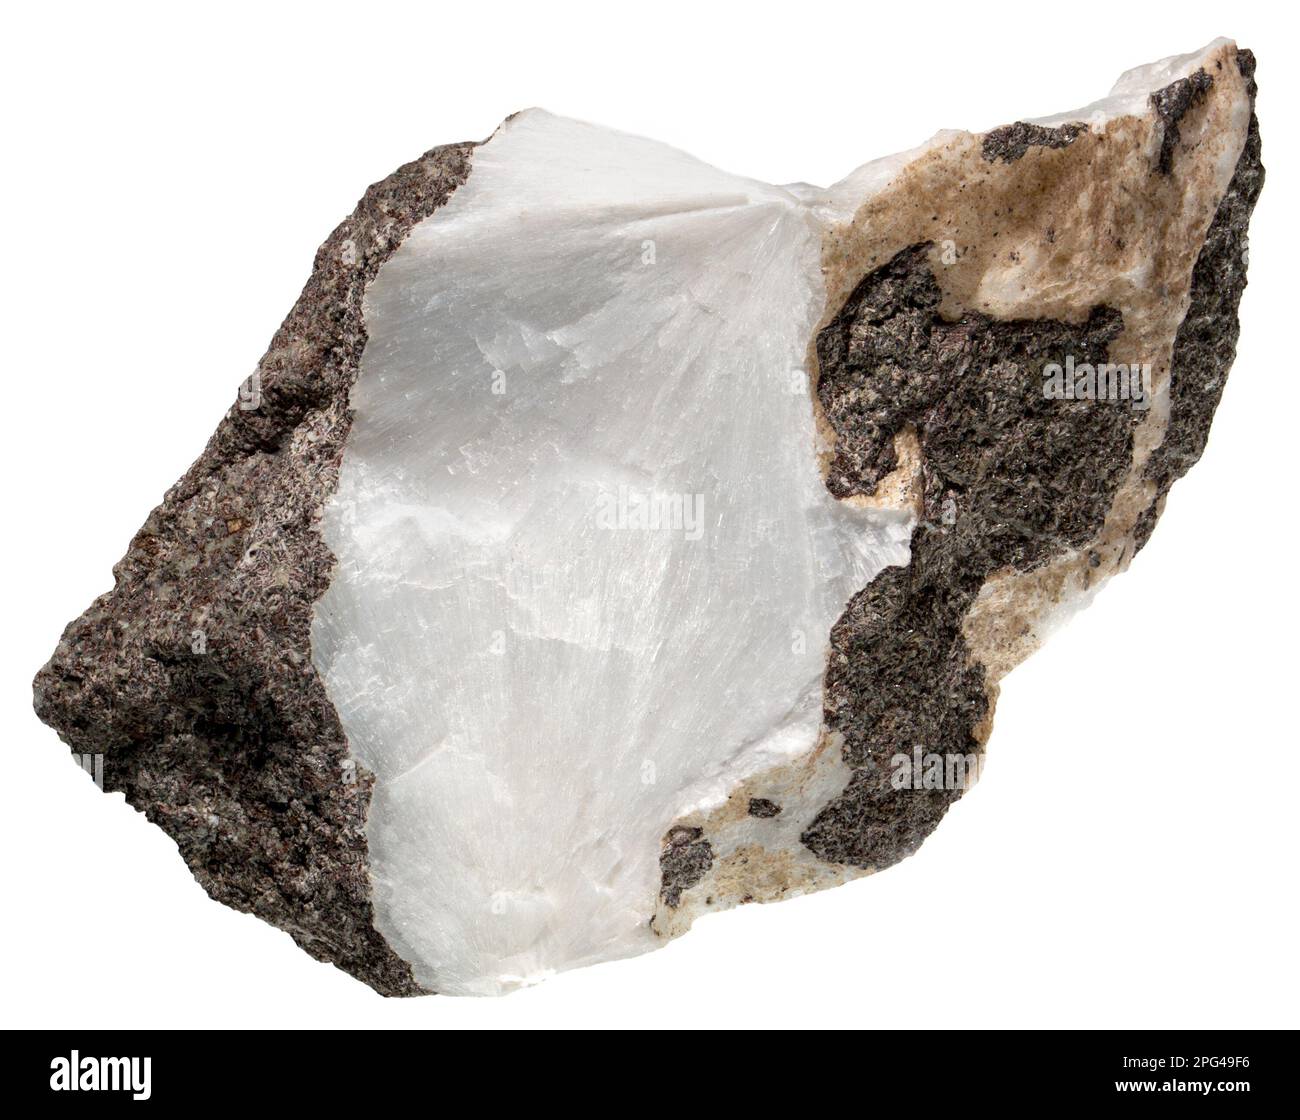 Natrolit - Hydratnatrium und Aluminiumsilikat [Na2Al2Si3O10] Tectosilikat-Mineral der Zeolith-Gruppe. Magheramourne, Antrim, Nordirland. Stockfoto